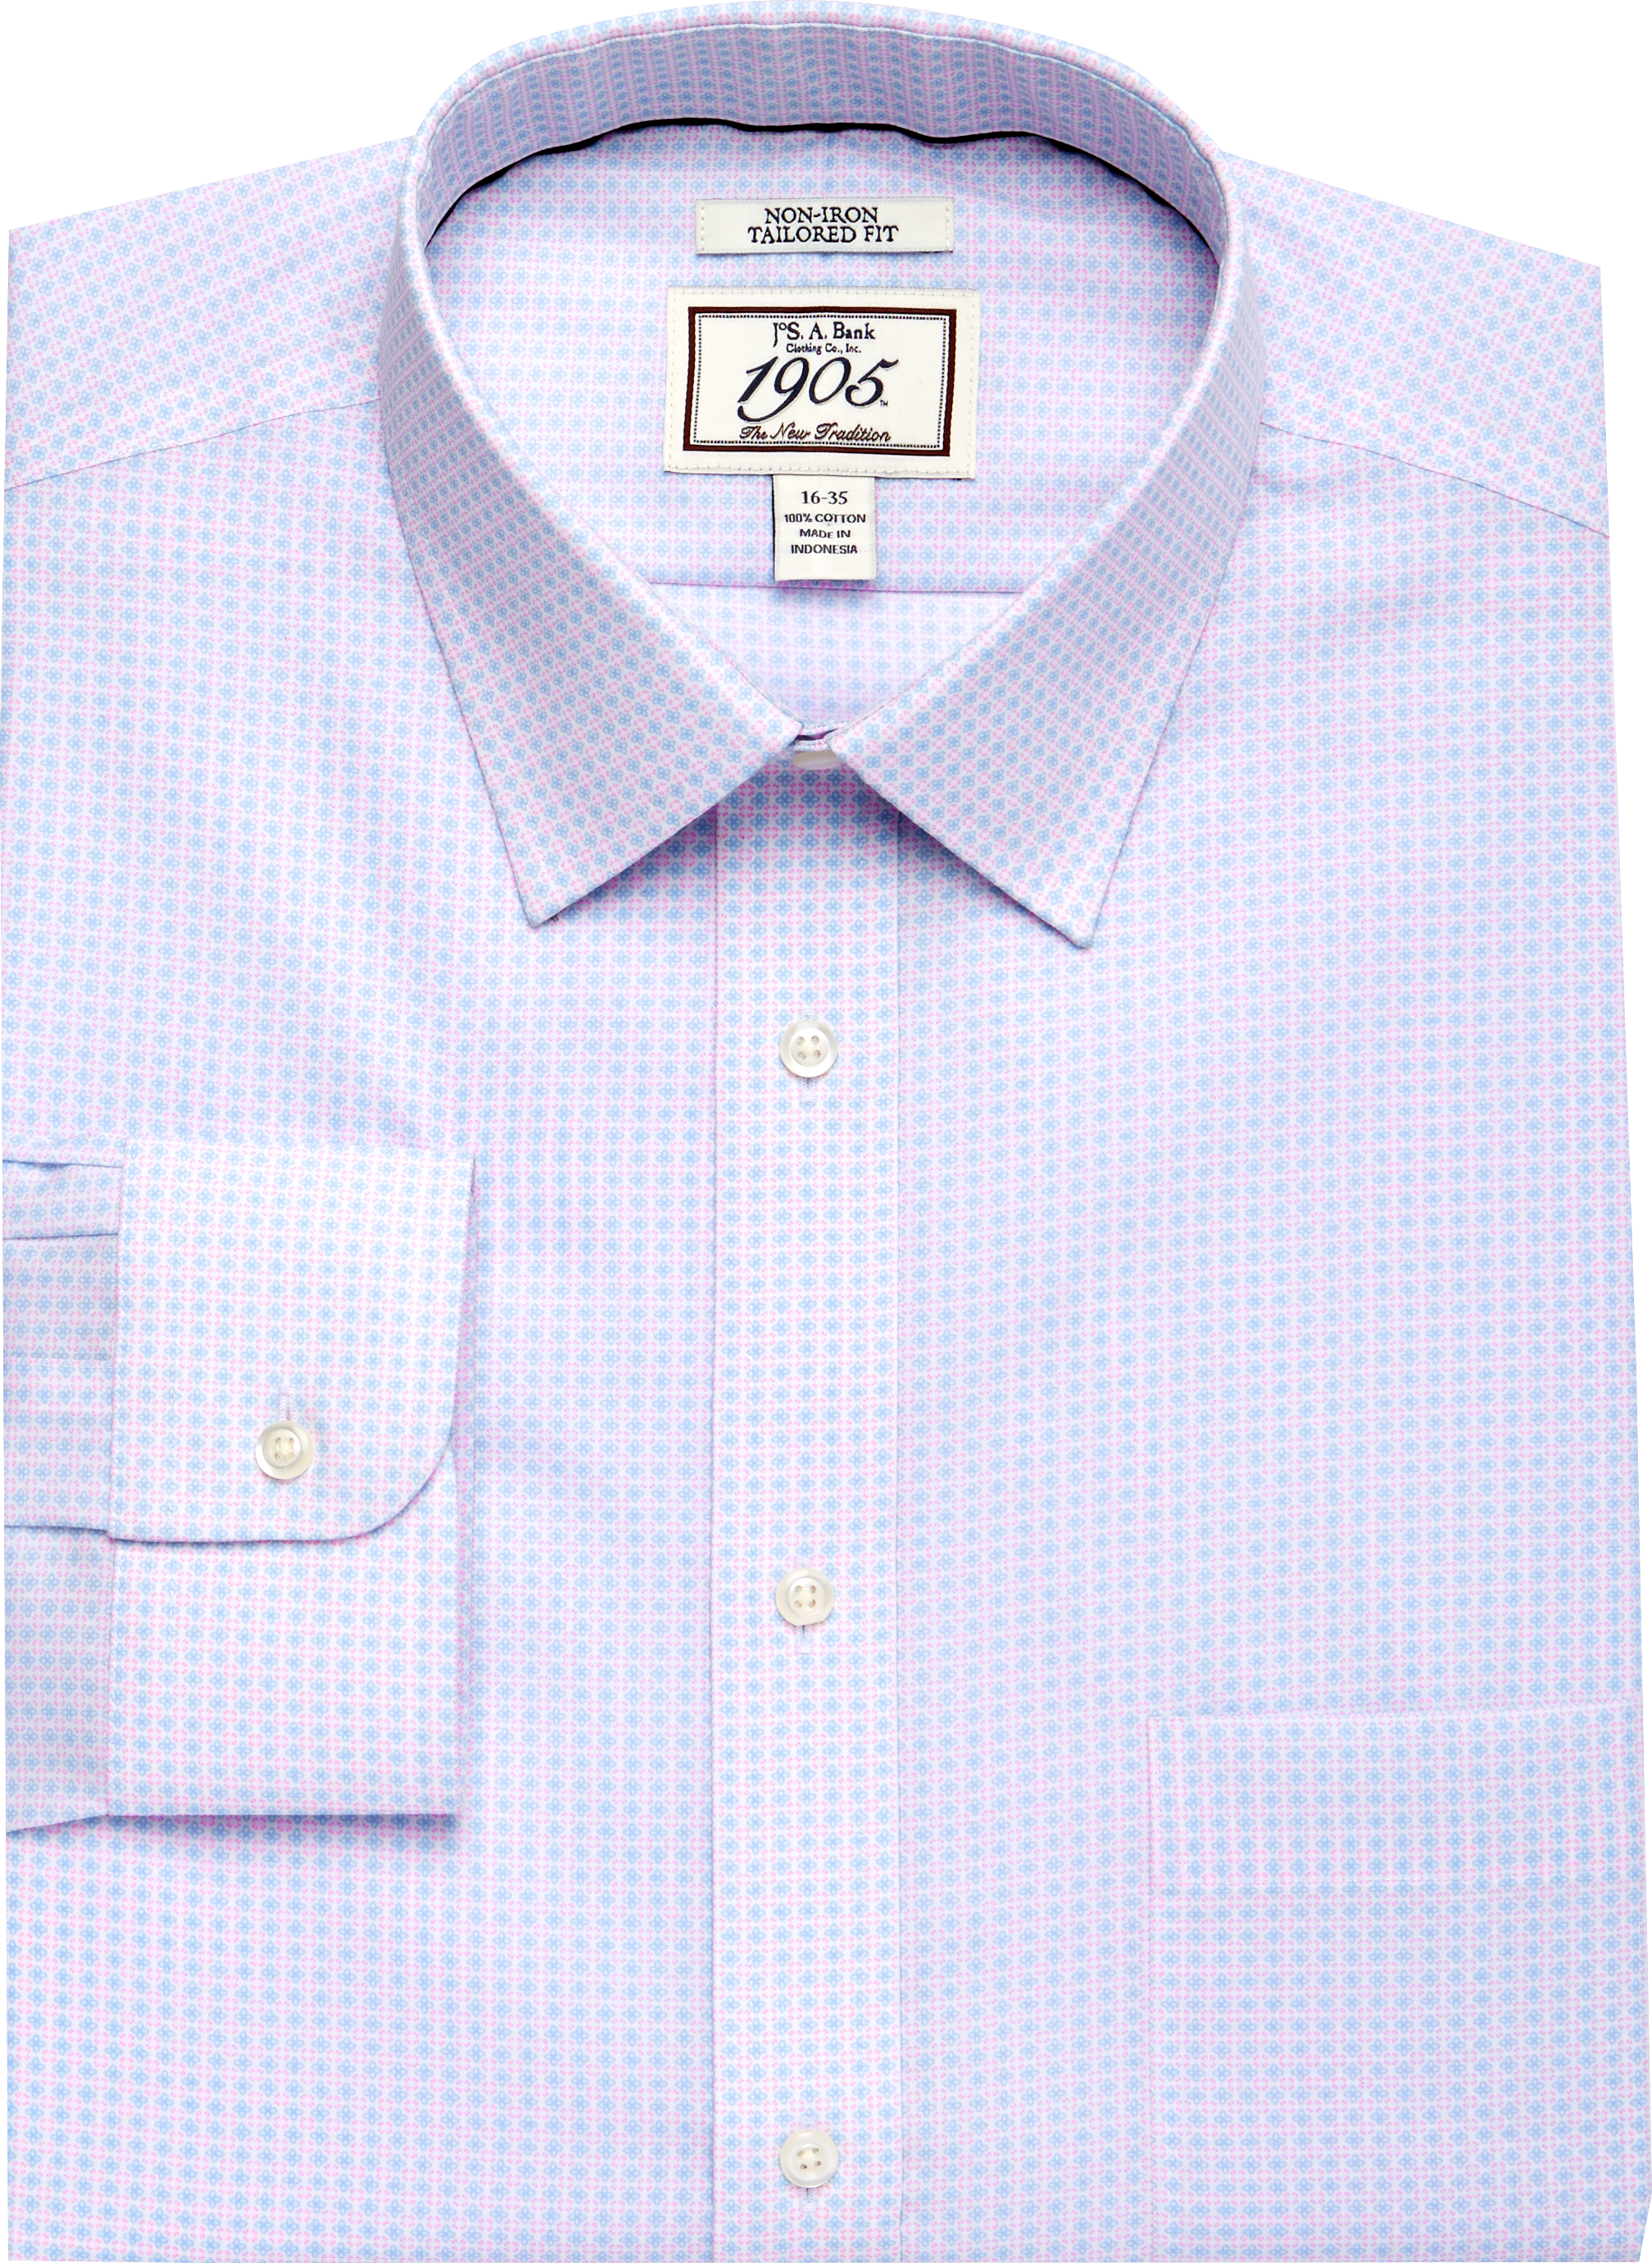 French Cuff Dress Shirts - Shop Men's Cufflink Shirts | JoS. A. Bank